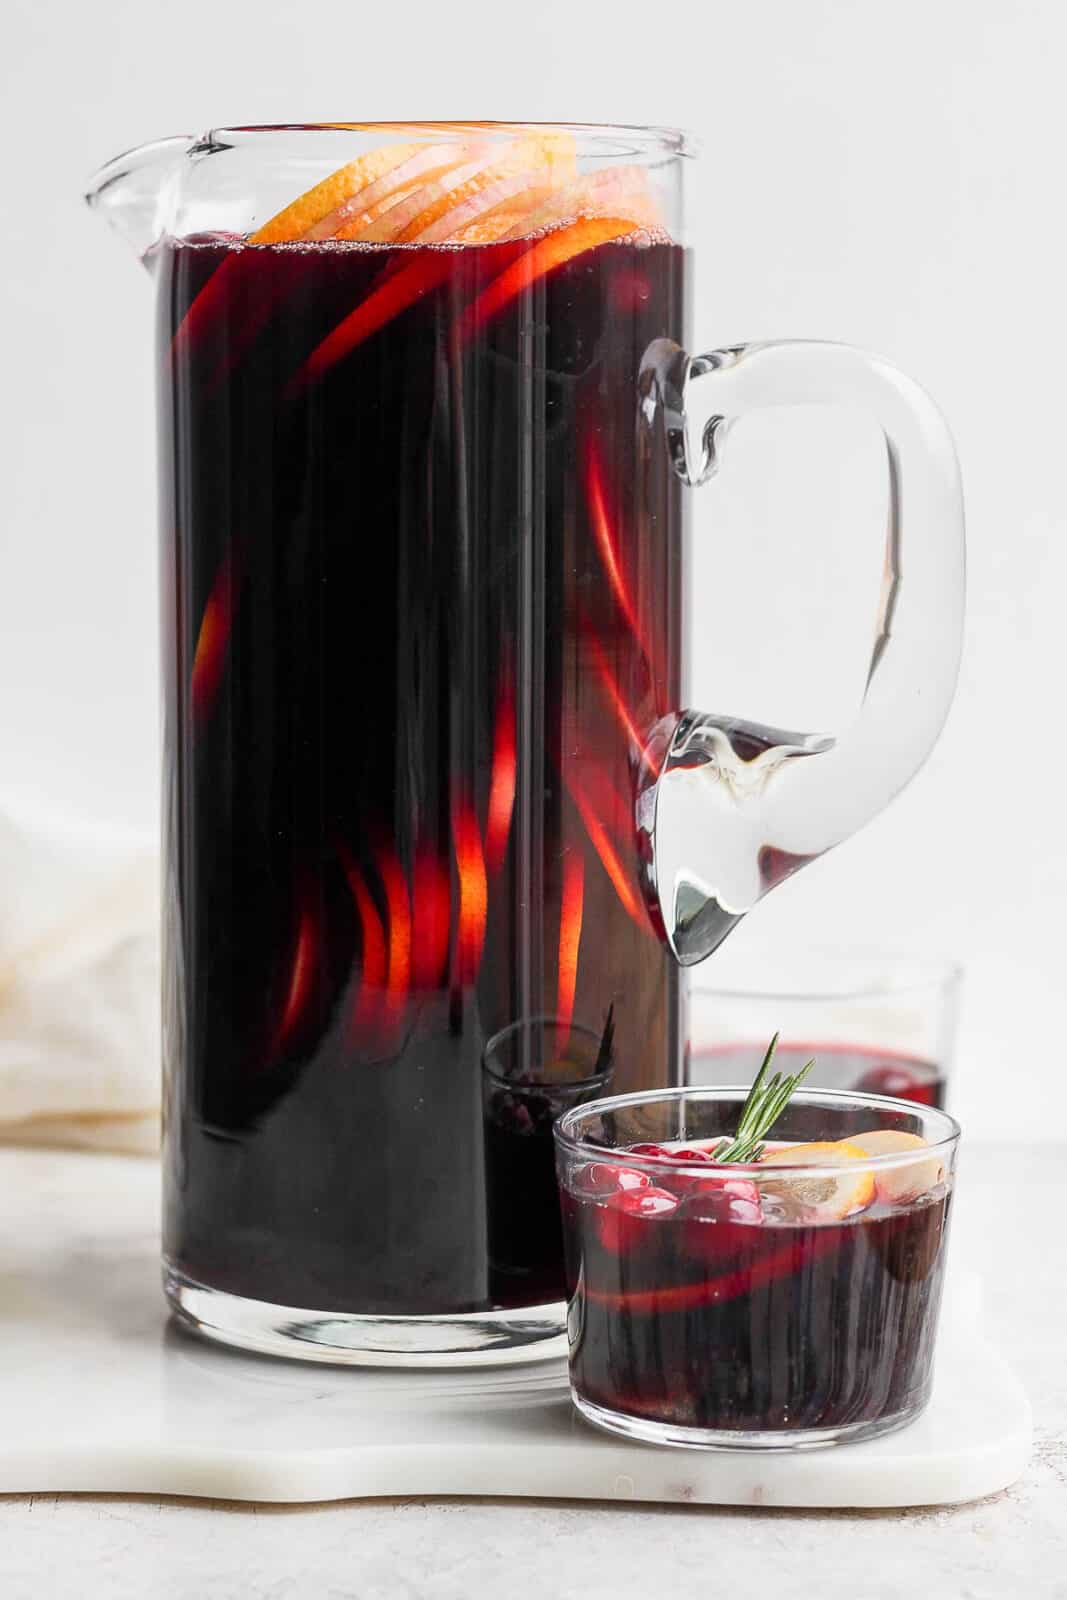 A glass and pitcher of Christmas sangria.